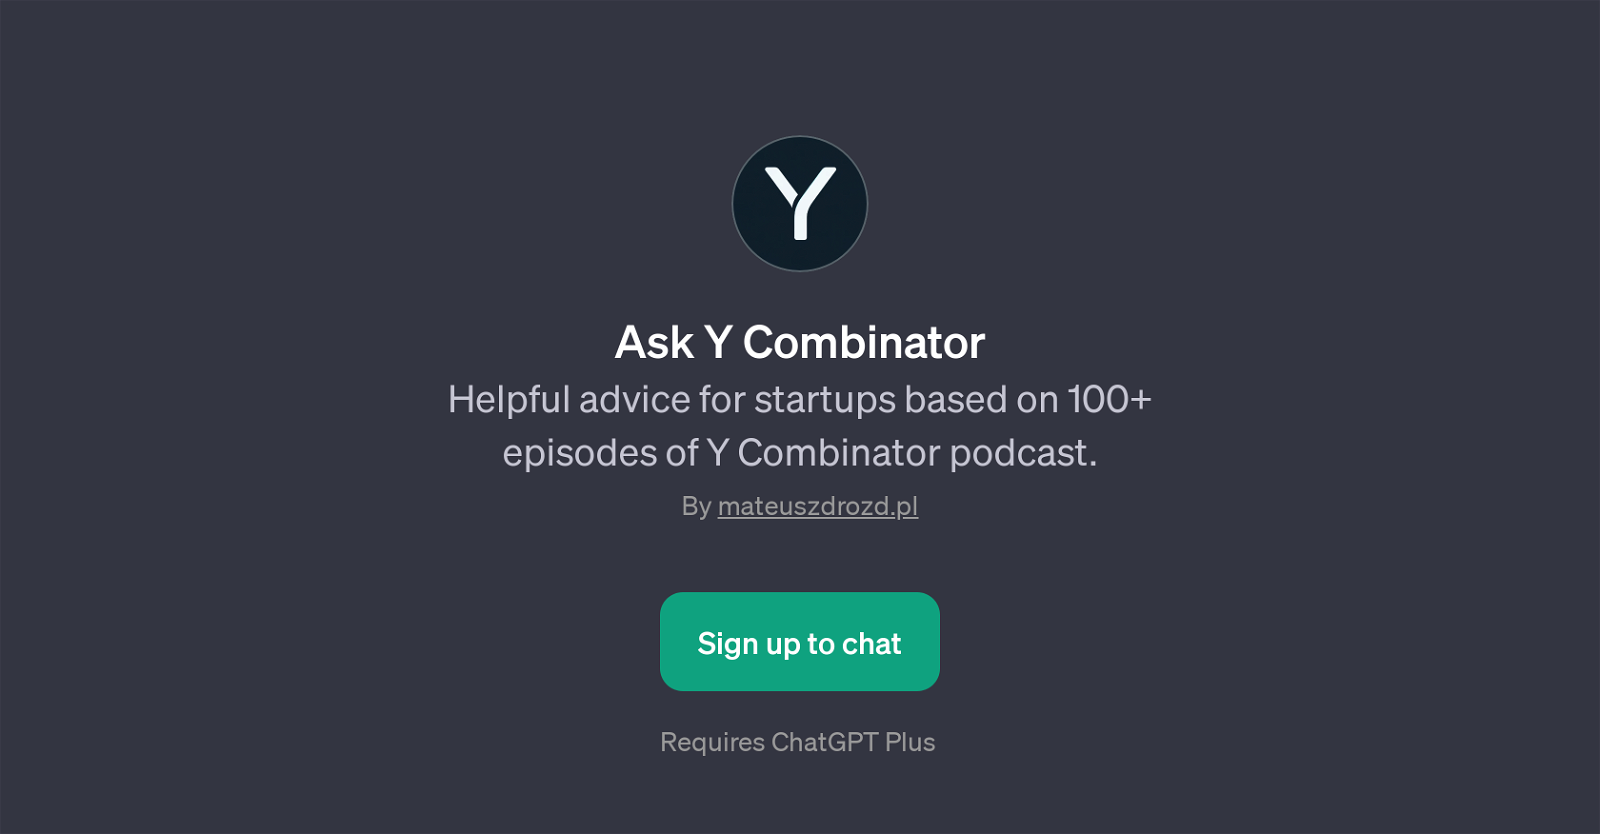 Ask Y Combinator website